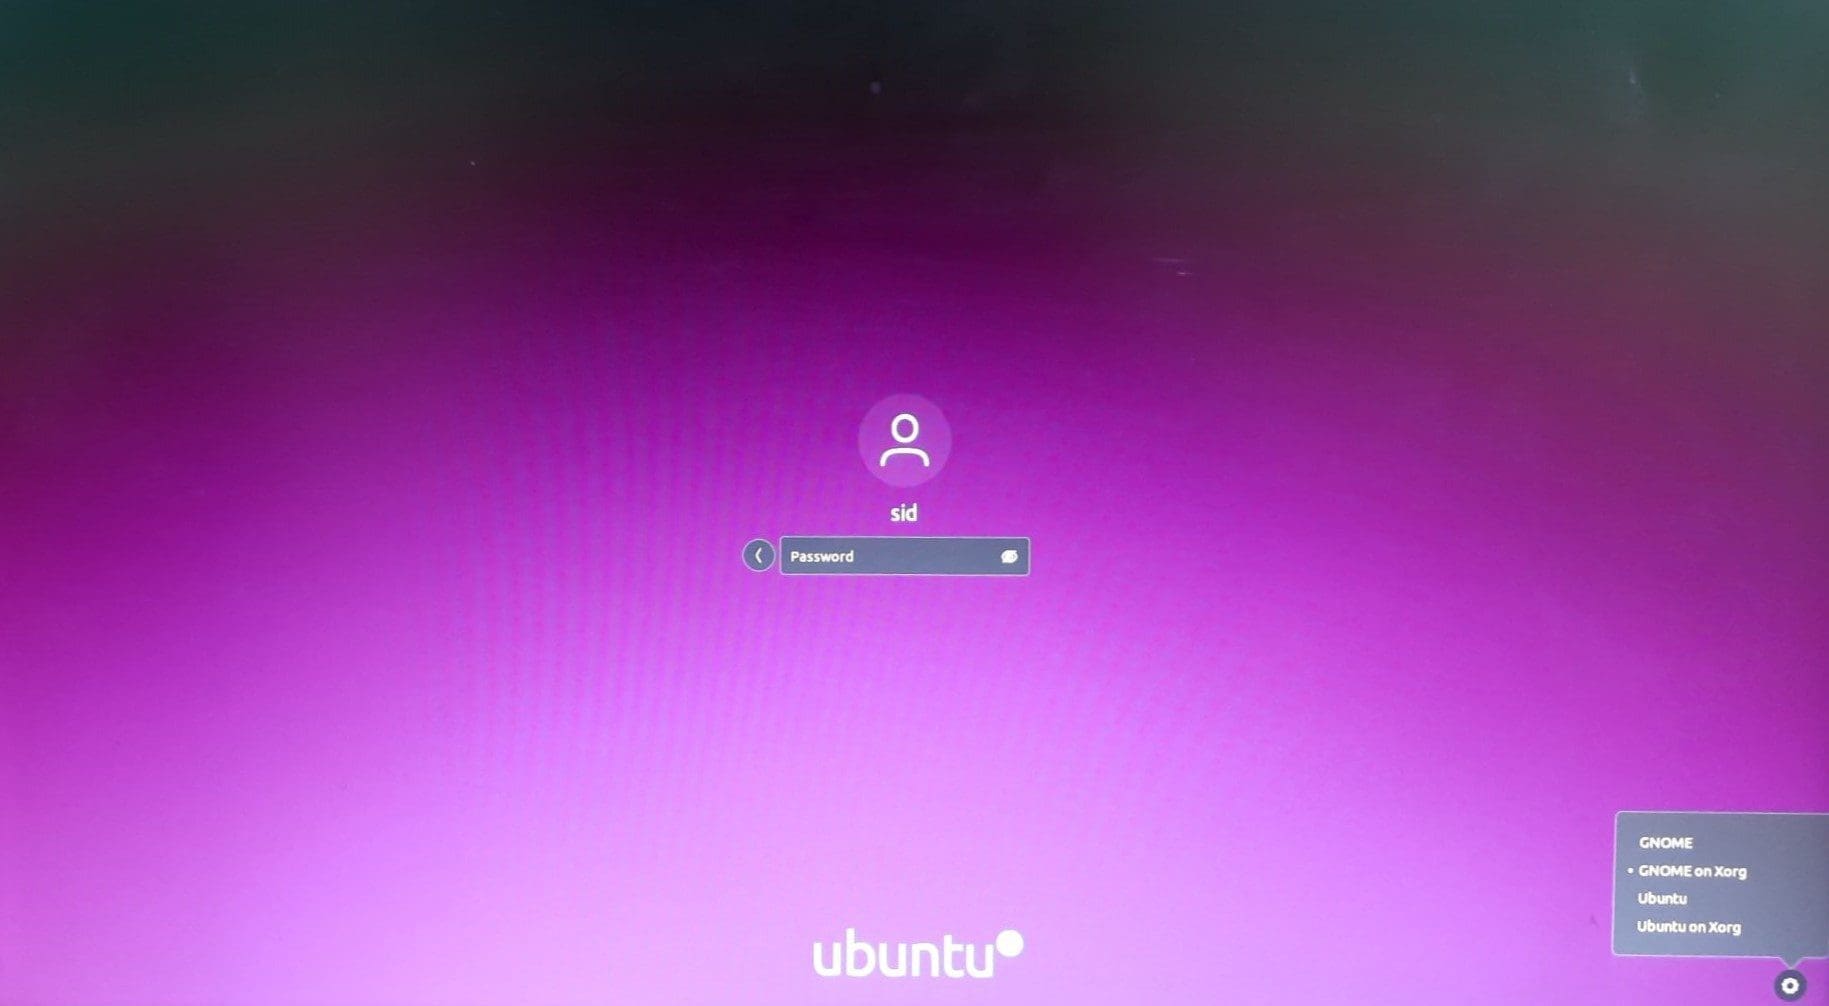 Switching to GNOME desktop